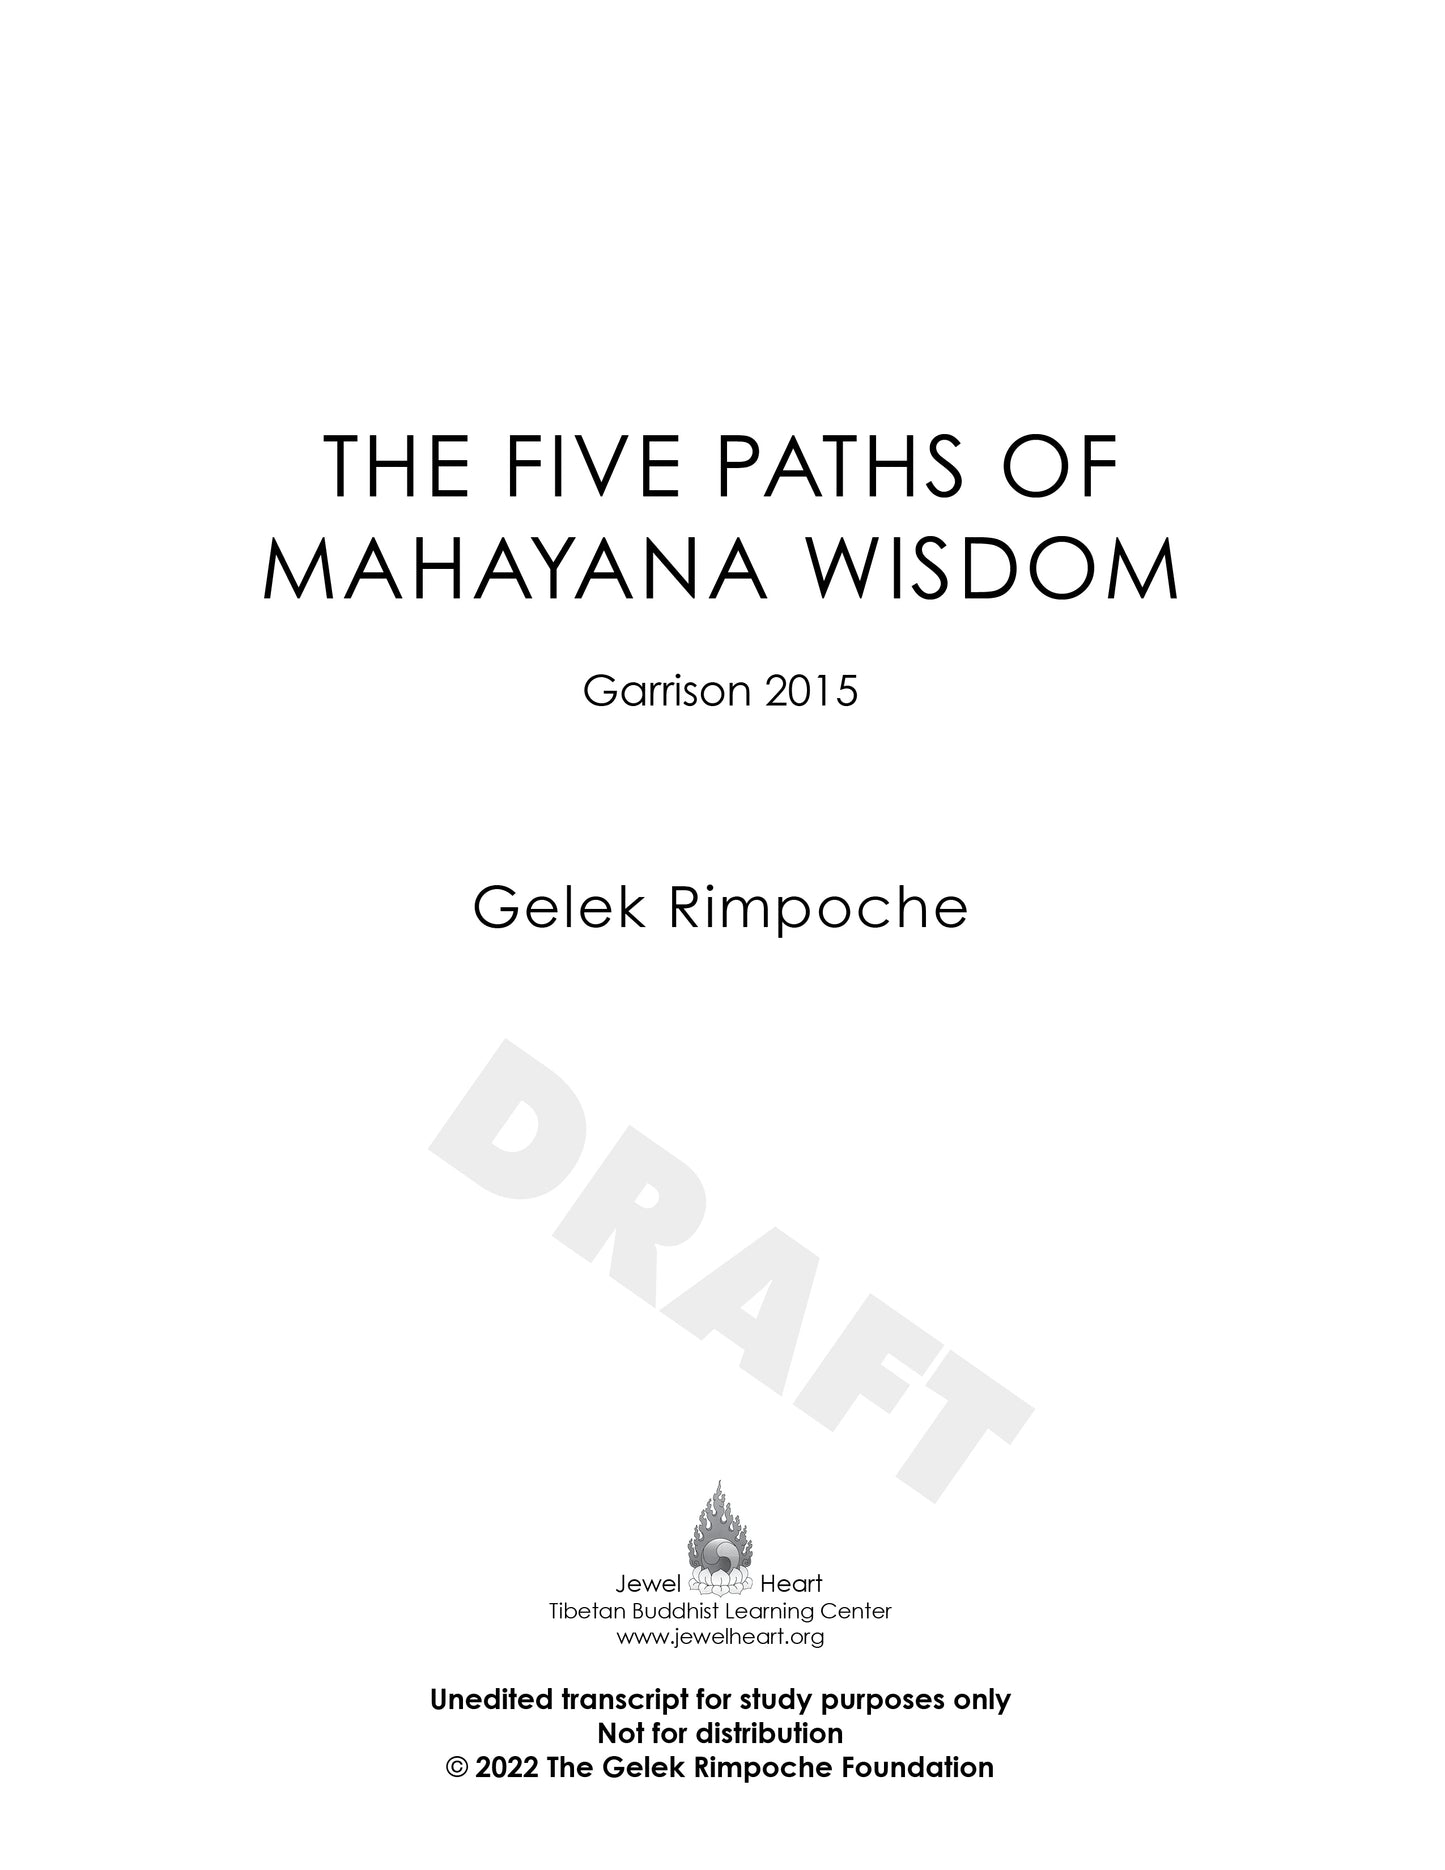 The Five Paths of Mahayana Wisdom: Garrison 2015